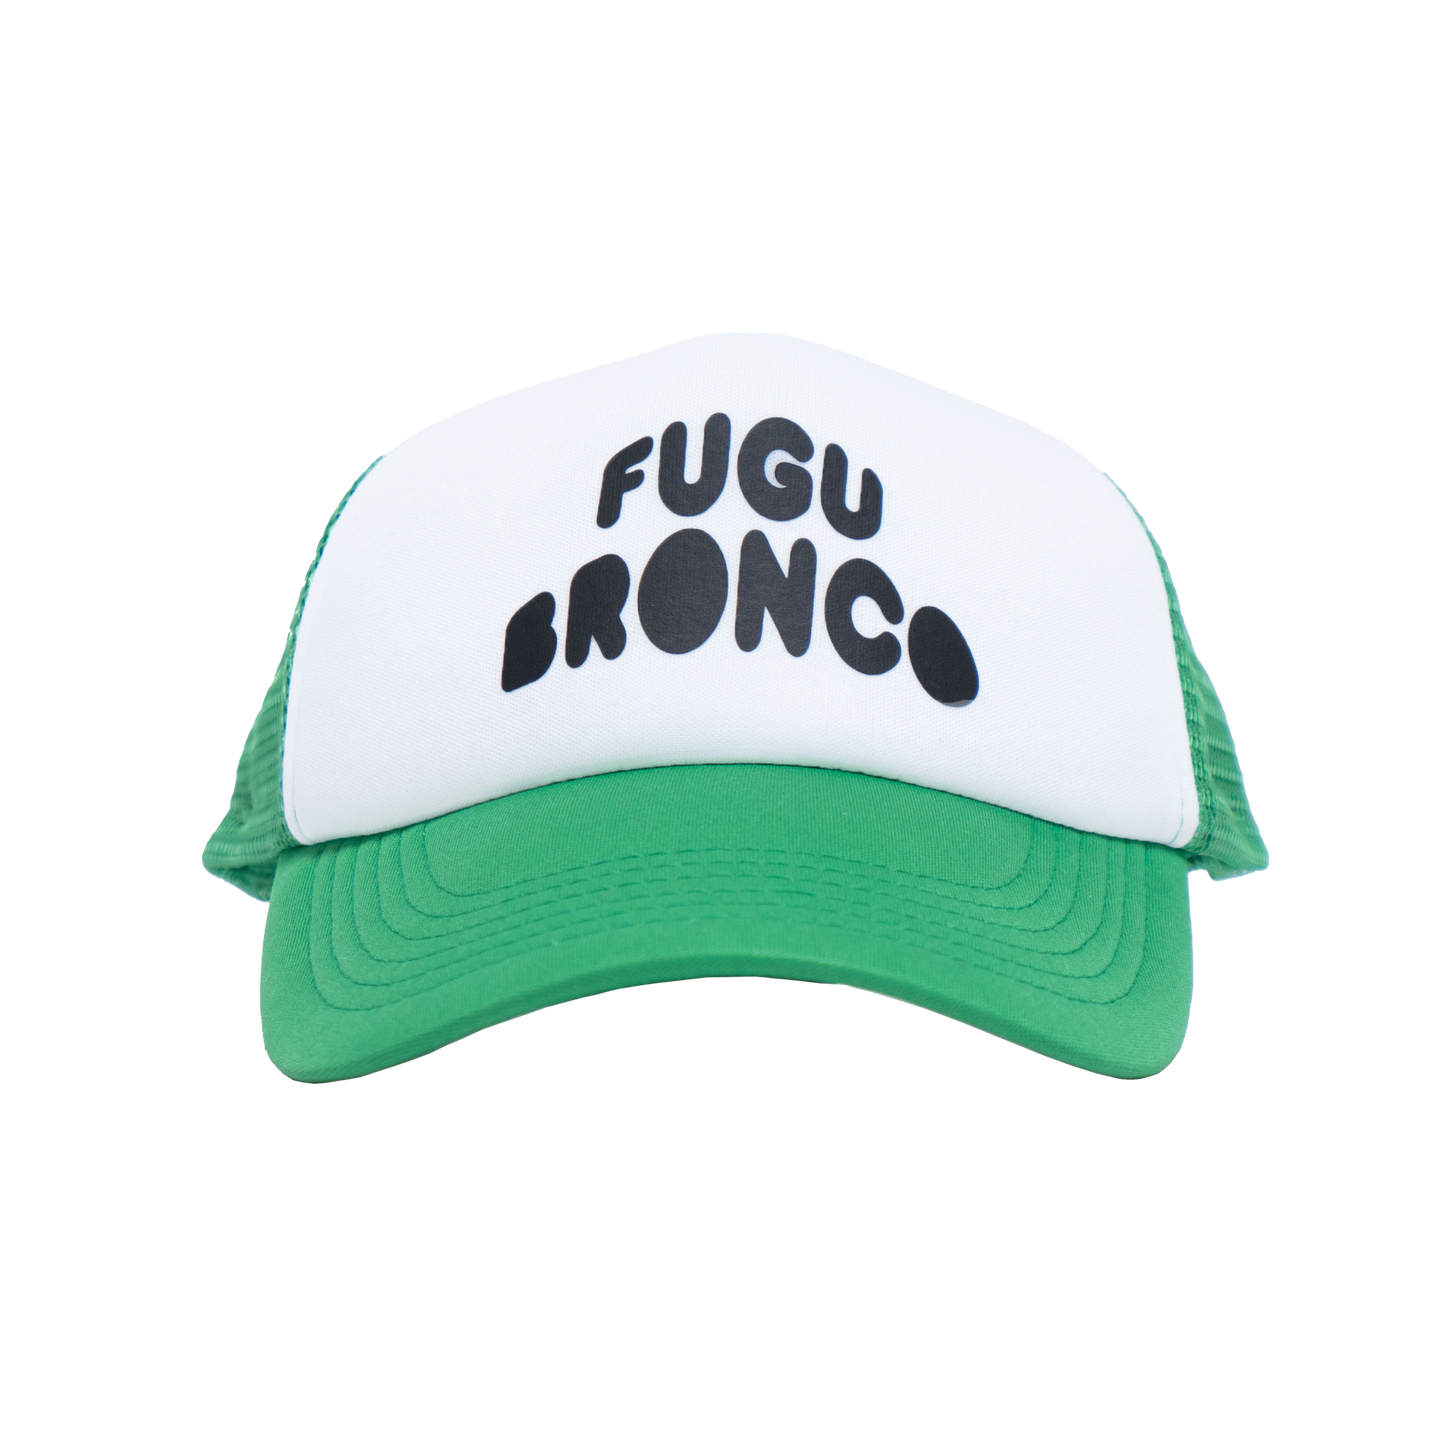 FUGU BRONCO CAP FERN GREEN